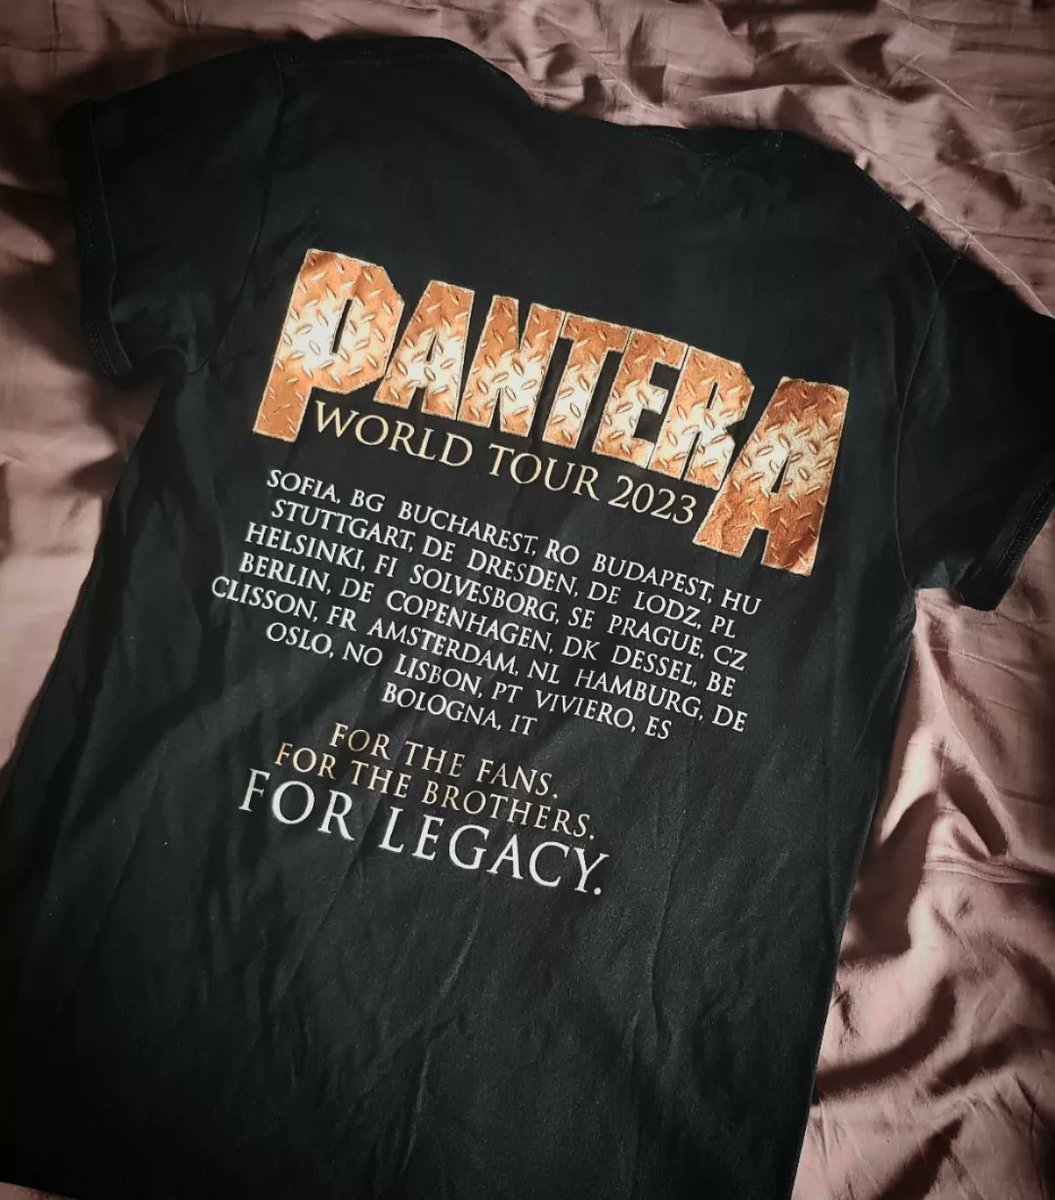 Another PanterA tour shirt!

#Pantera #PhilAnselmo #DimebagDarrell #RexBrown #VinniePaul #ZackWylde #CharlieBenante #CowboysFromHell #legends #music #metal #Graspop #GraspopMetalMeeting